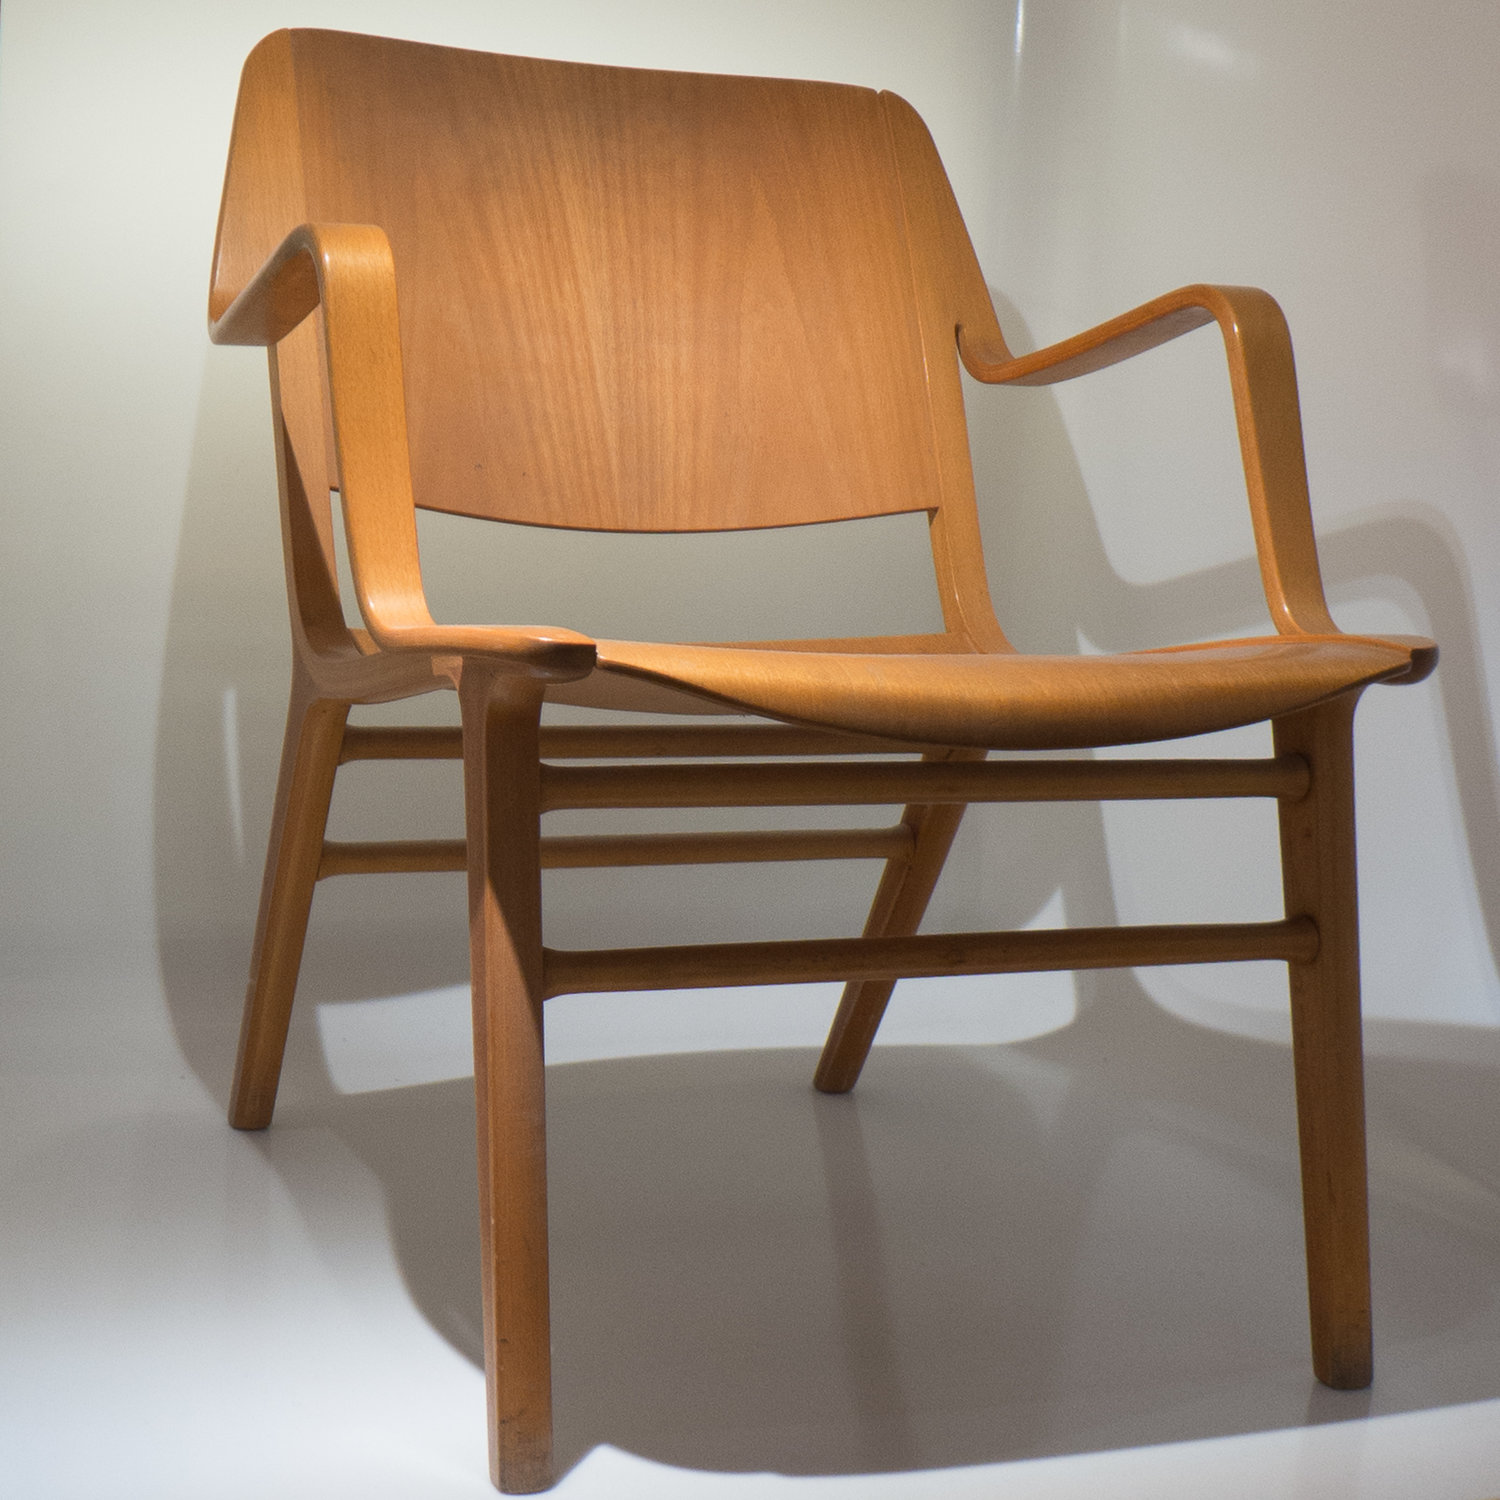 Alexander Graham Bell Afskedige ilt Ax chair by Peter Hvidt and Orla Mølgaard-Nielsen 1947 — danish  architecture and design review